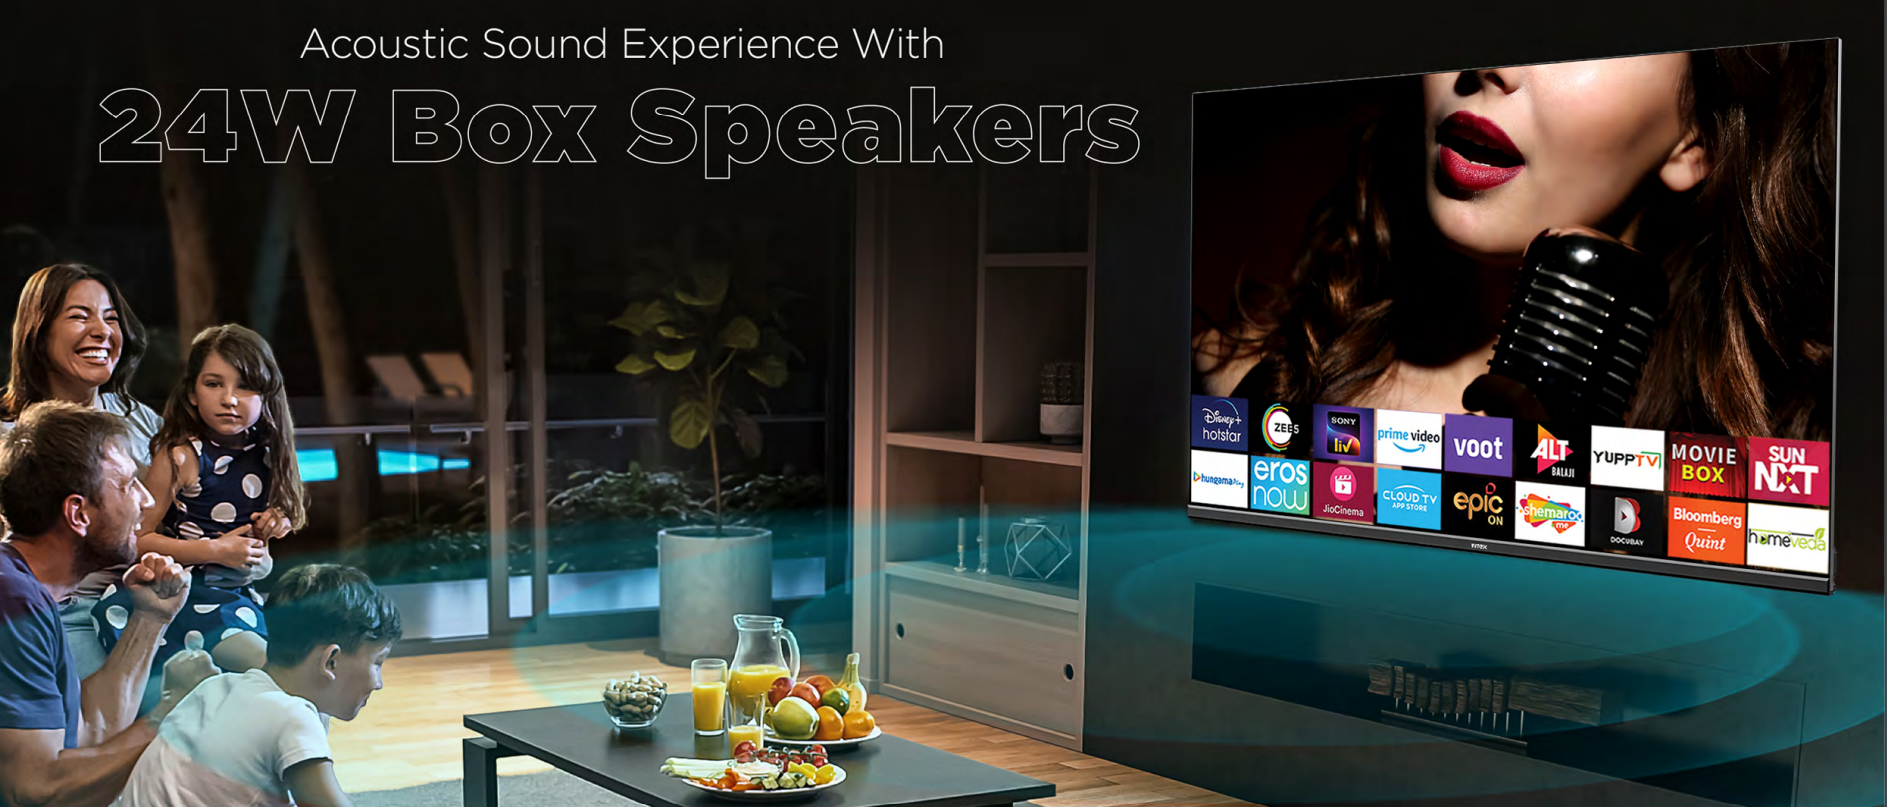 Intex 43 inch Full HD Smart Android 9.0 LED TV (LED-SFF4311)